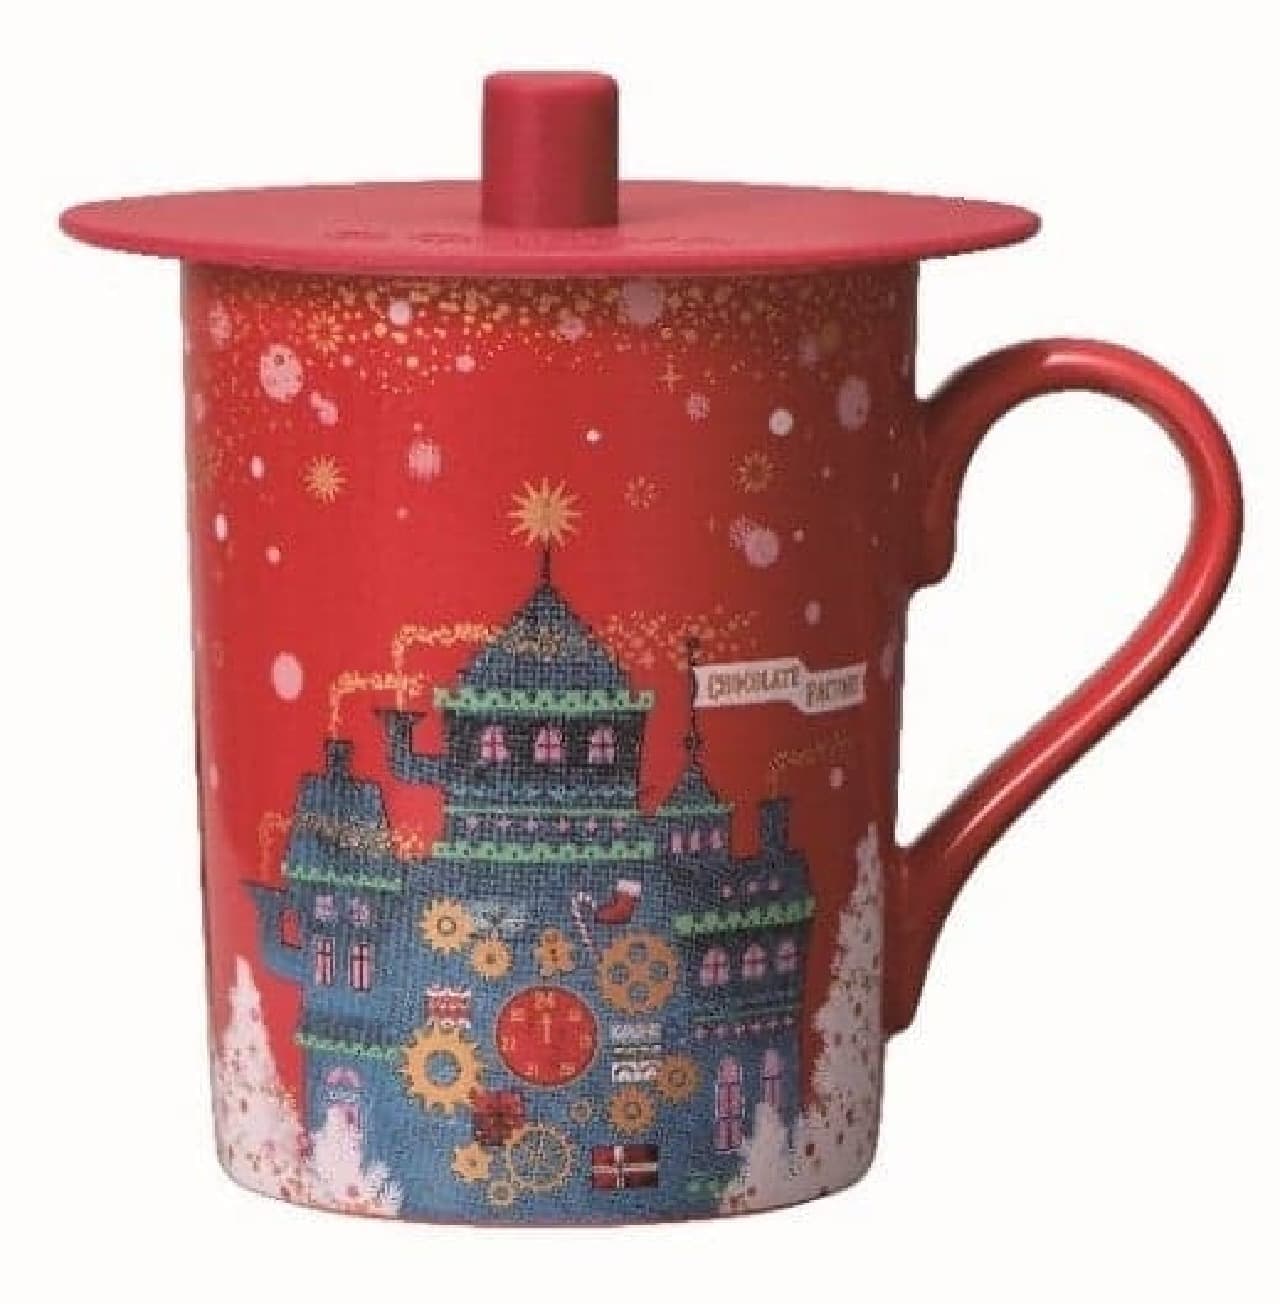 Godiva Holiday Collection "Original Mug & Silicone Cup Cover" Present Campaign